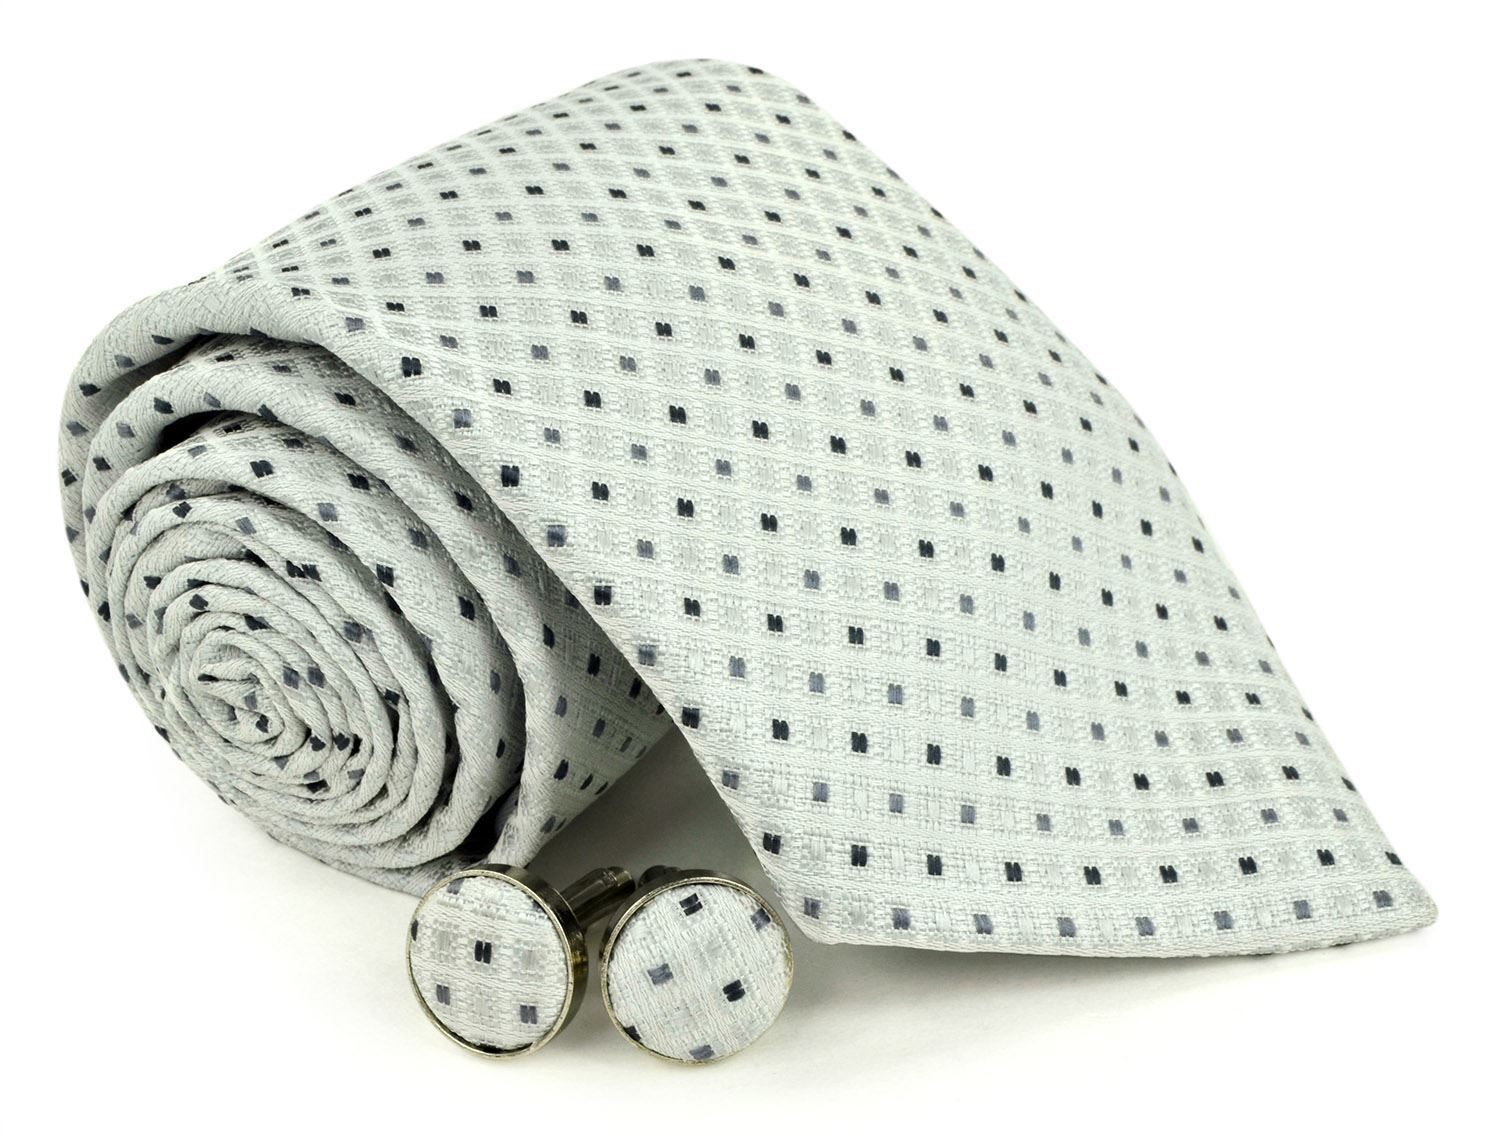 Moda Di Raza Men's NeckTies - 3 Inch Tie - Gift Box Sets - LightGray-II Tie With Cuff-link In Box